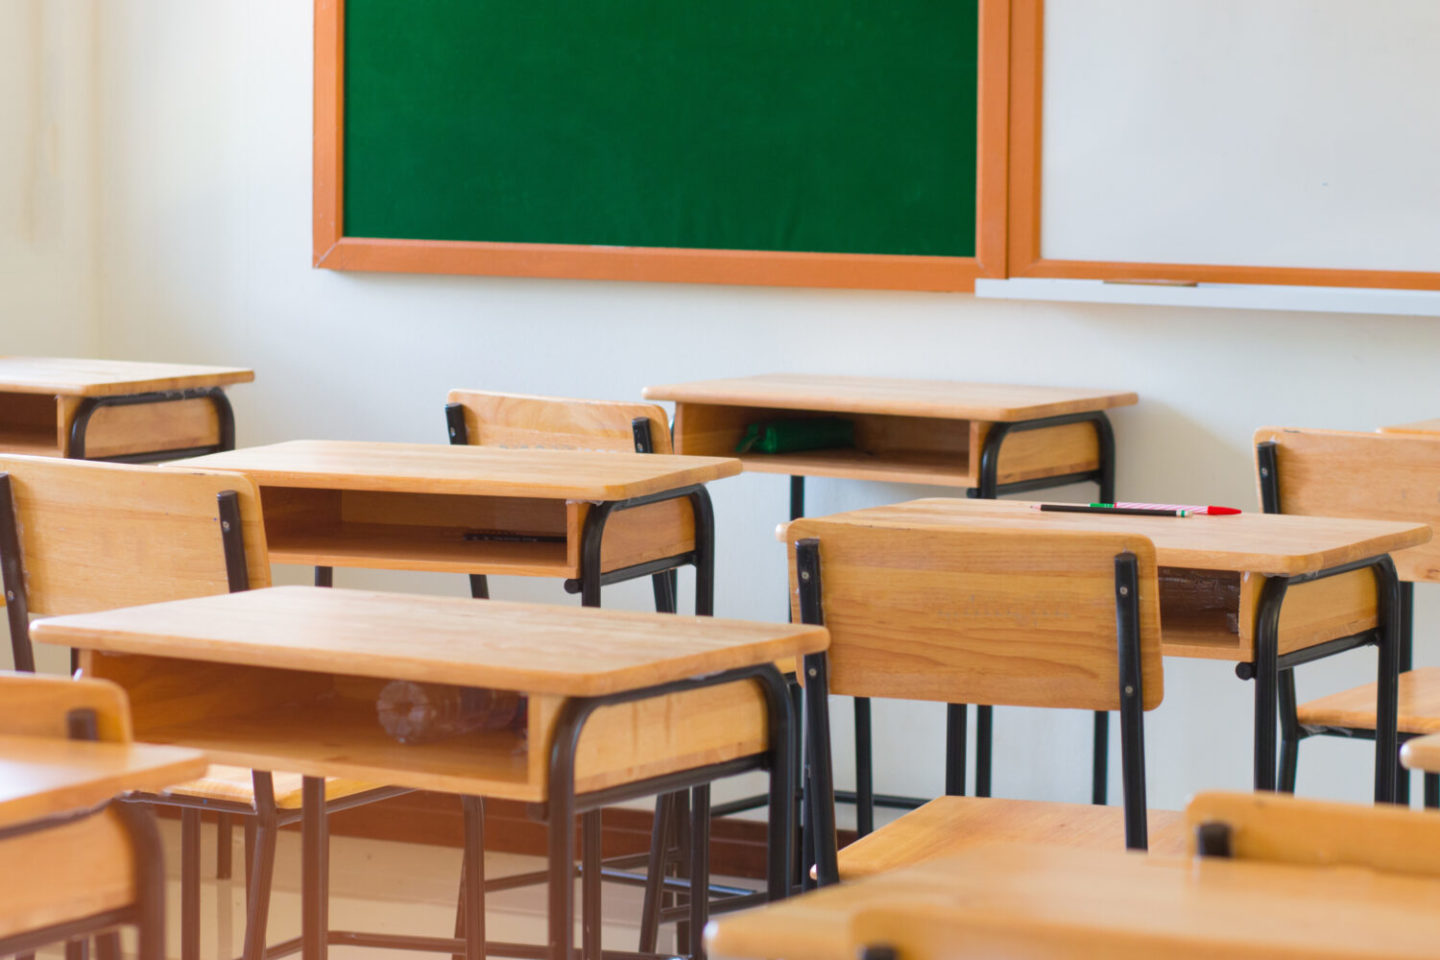 Public education ‘betrays its purpose,’ says former public school teacher